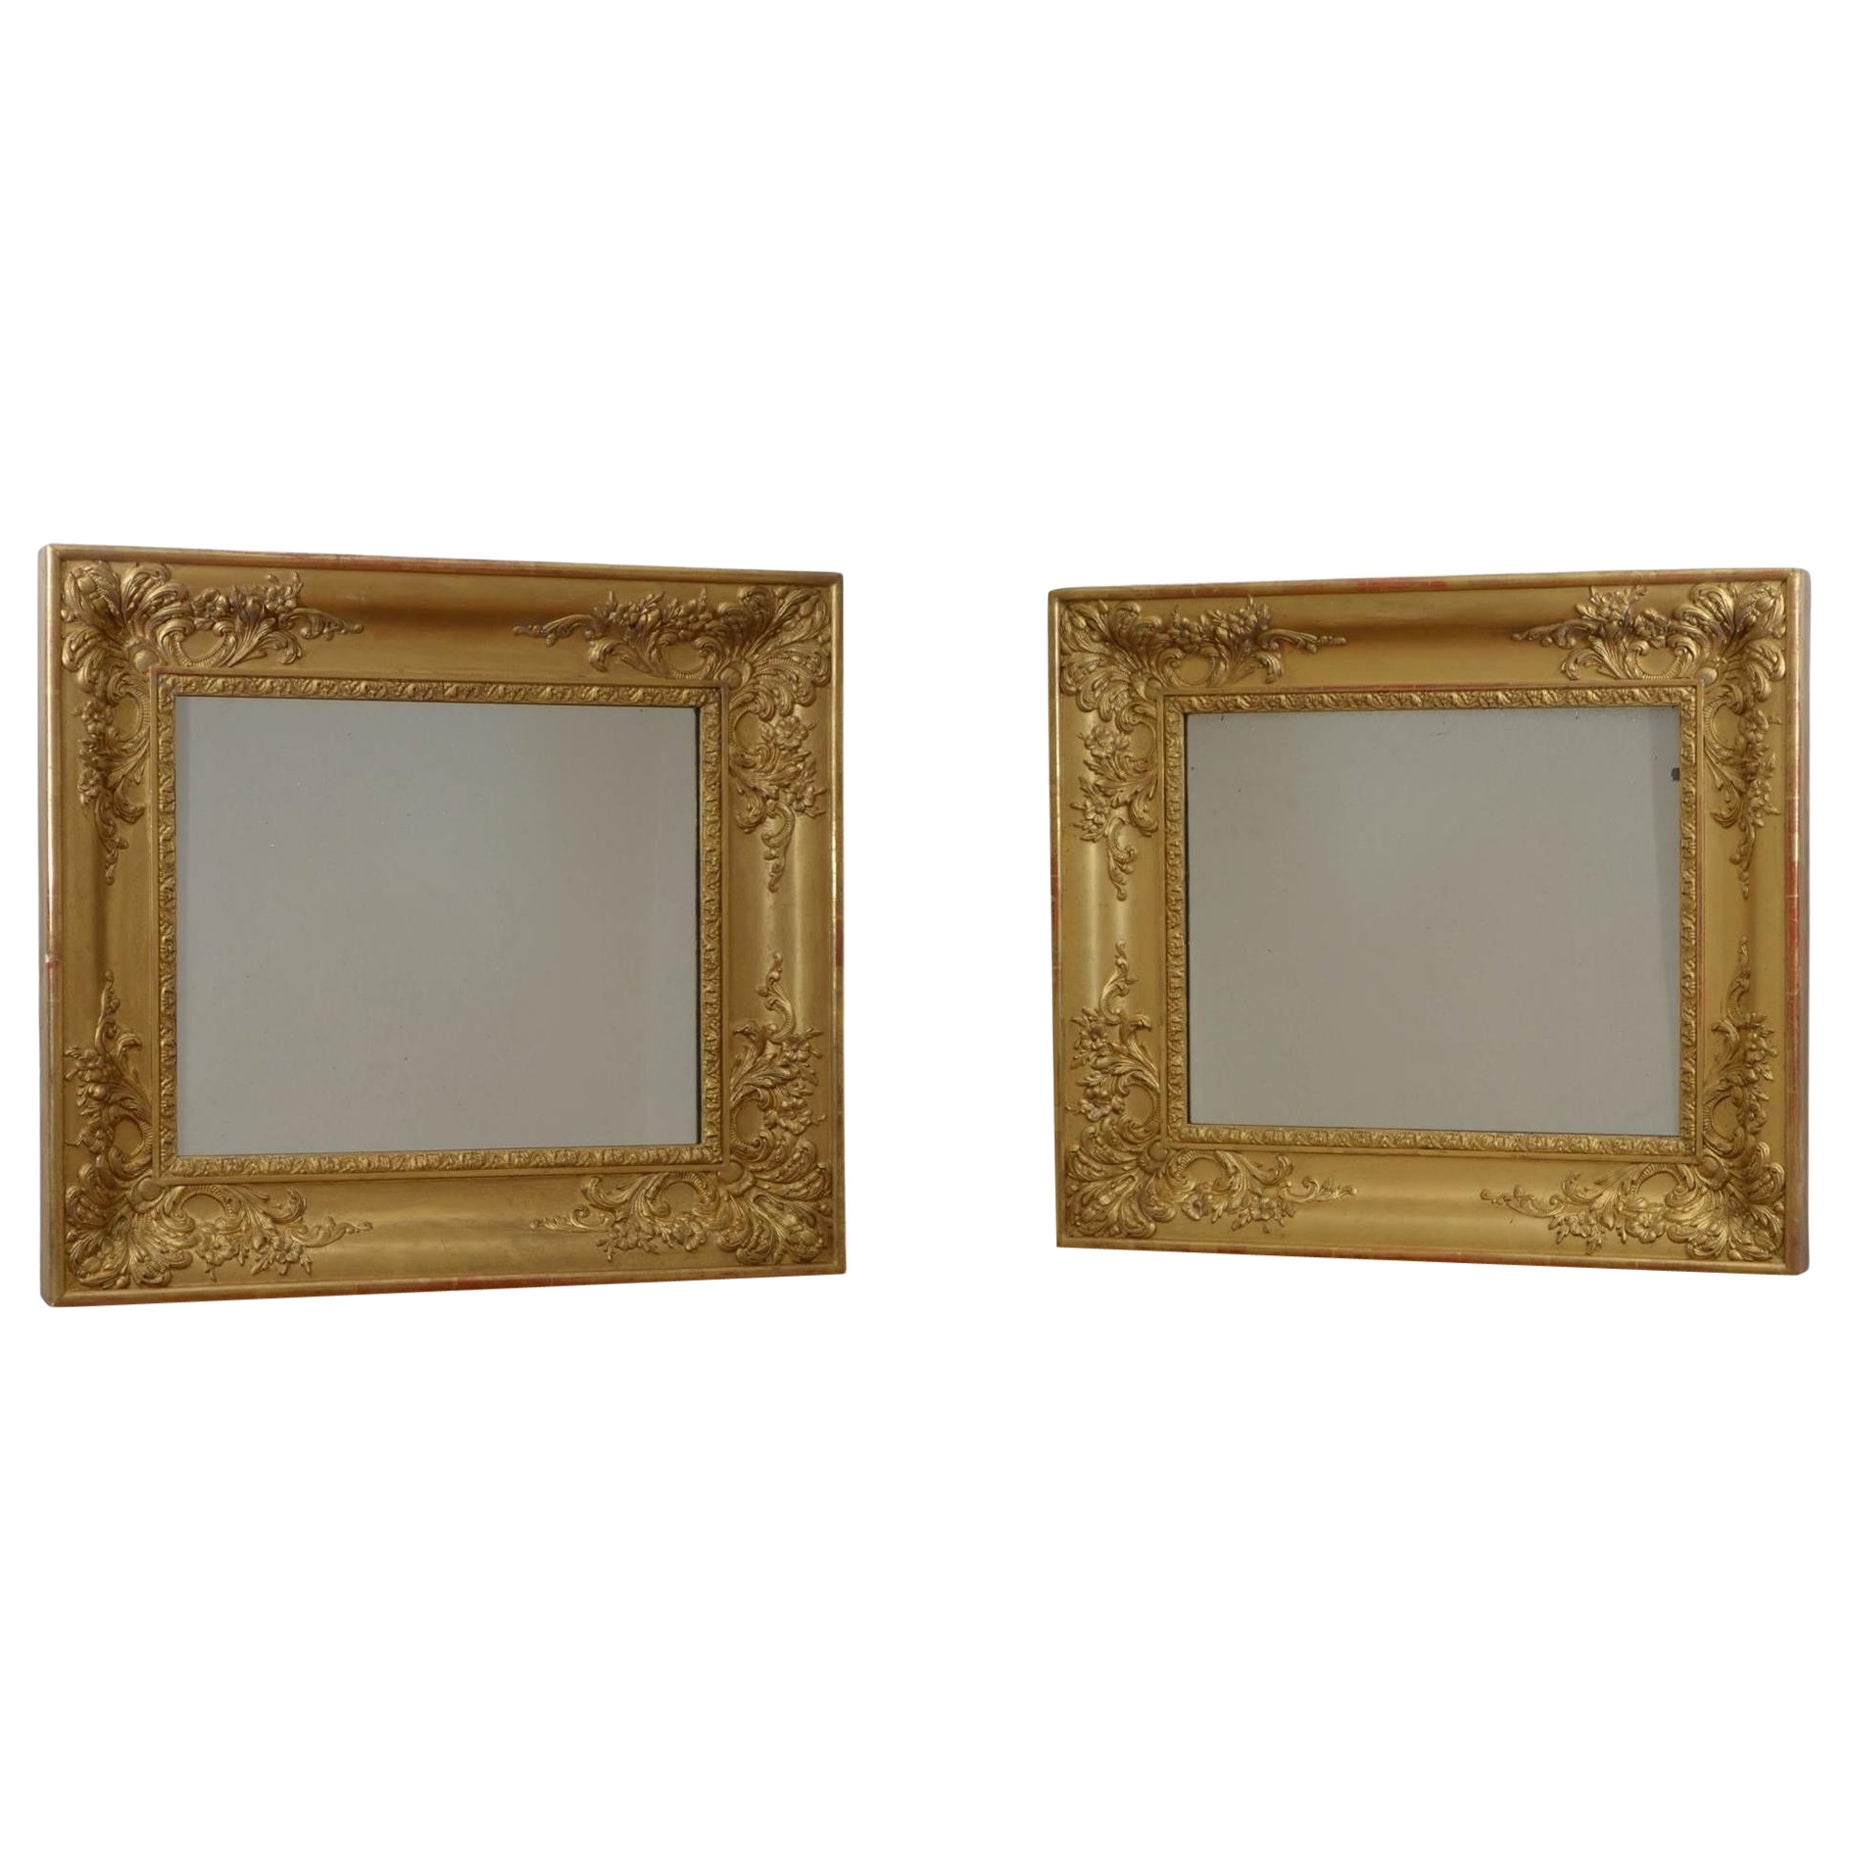 Pair of 19th Century Wall Mirrors